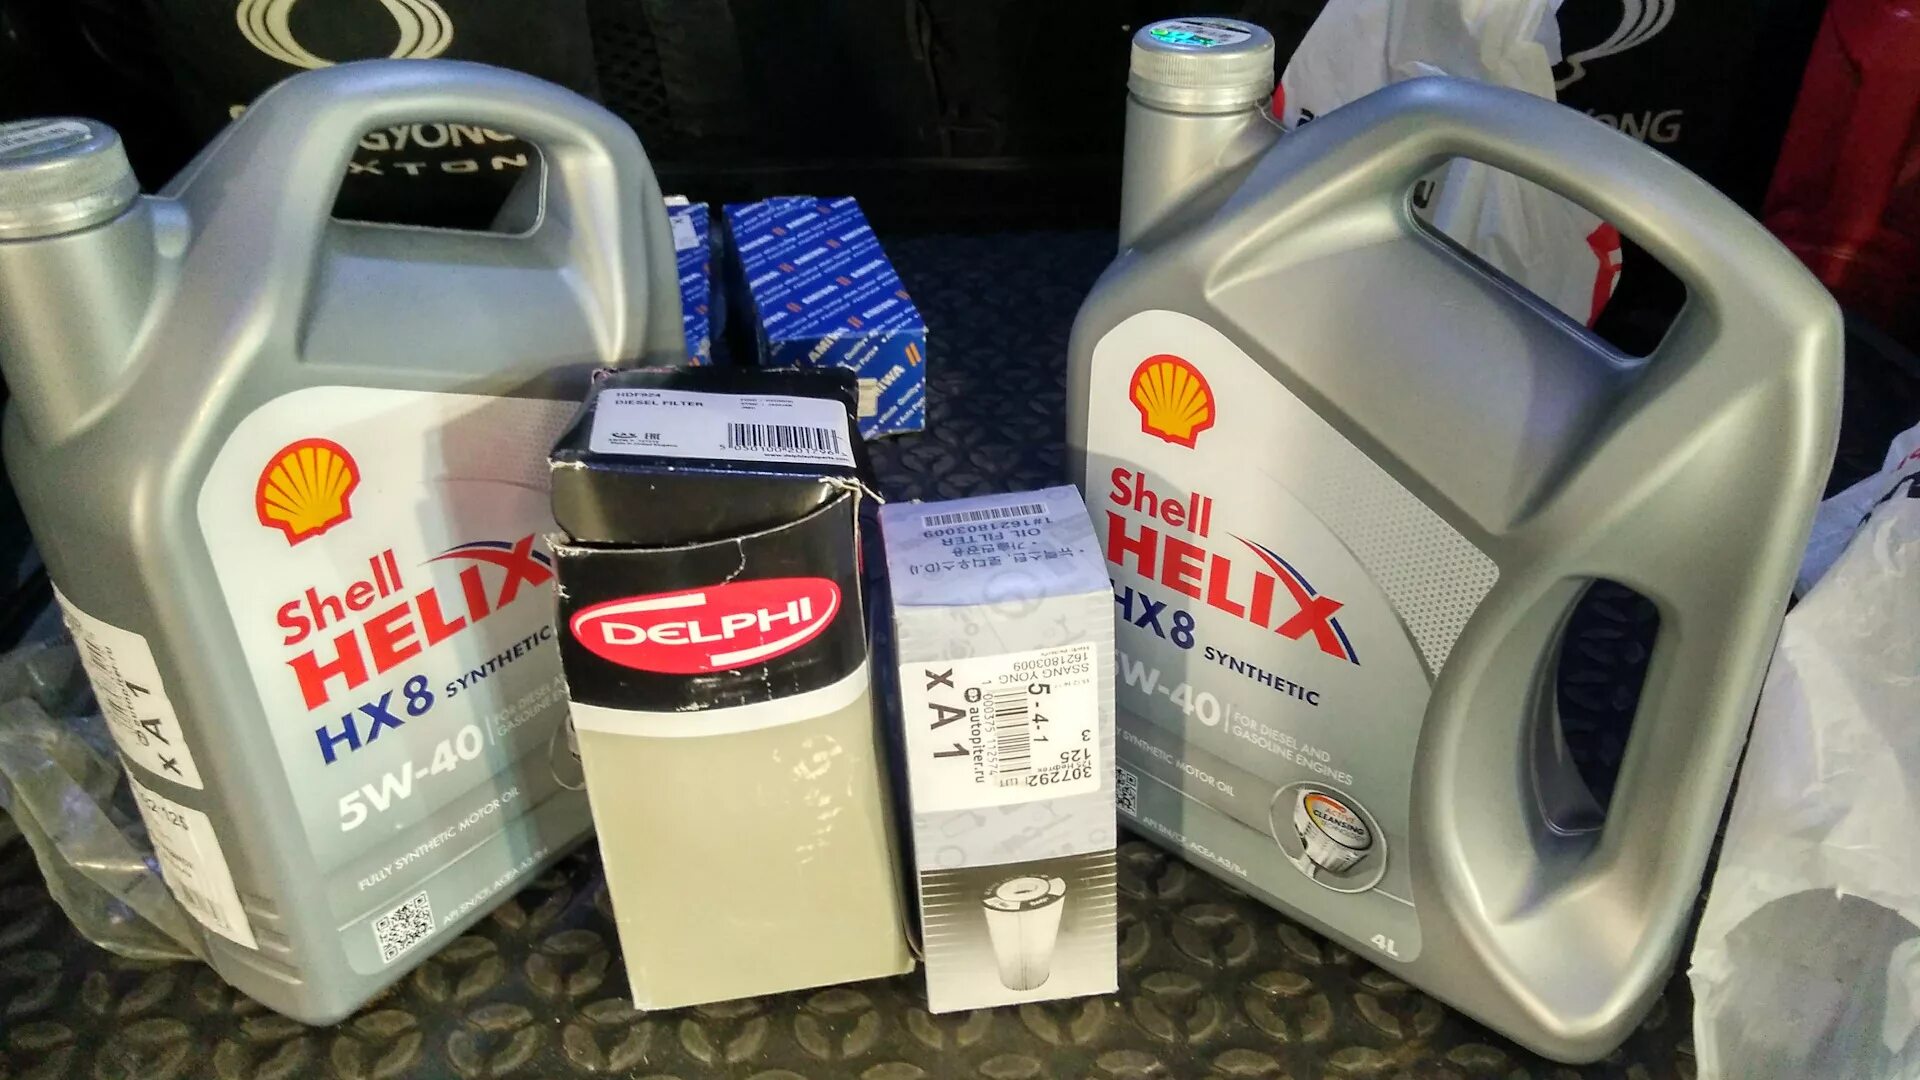 Моторное масло Shell для SSANGYONG Rexton 2 дизель. Масло ДВС Рекстон 2.7 дизель. SSANGYONG Rexton дизель масло ДВС 2.7 фильтр масляный. Масло в Rexton 2 дизель.